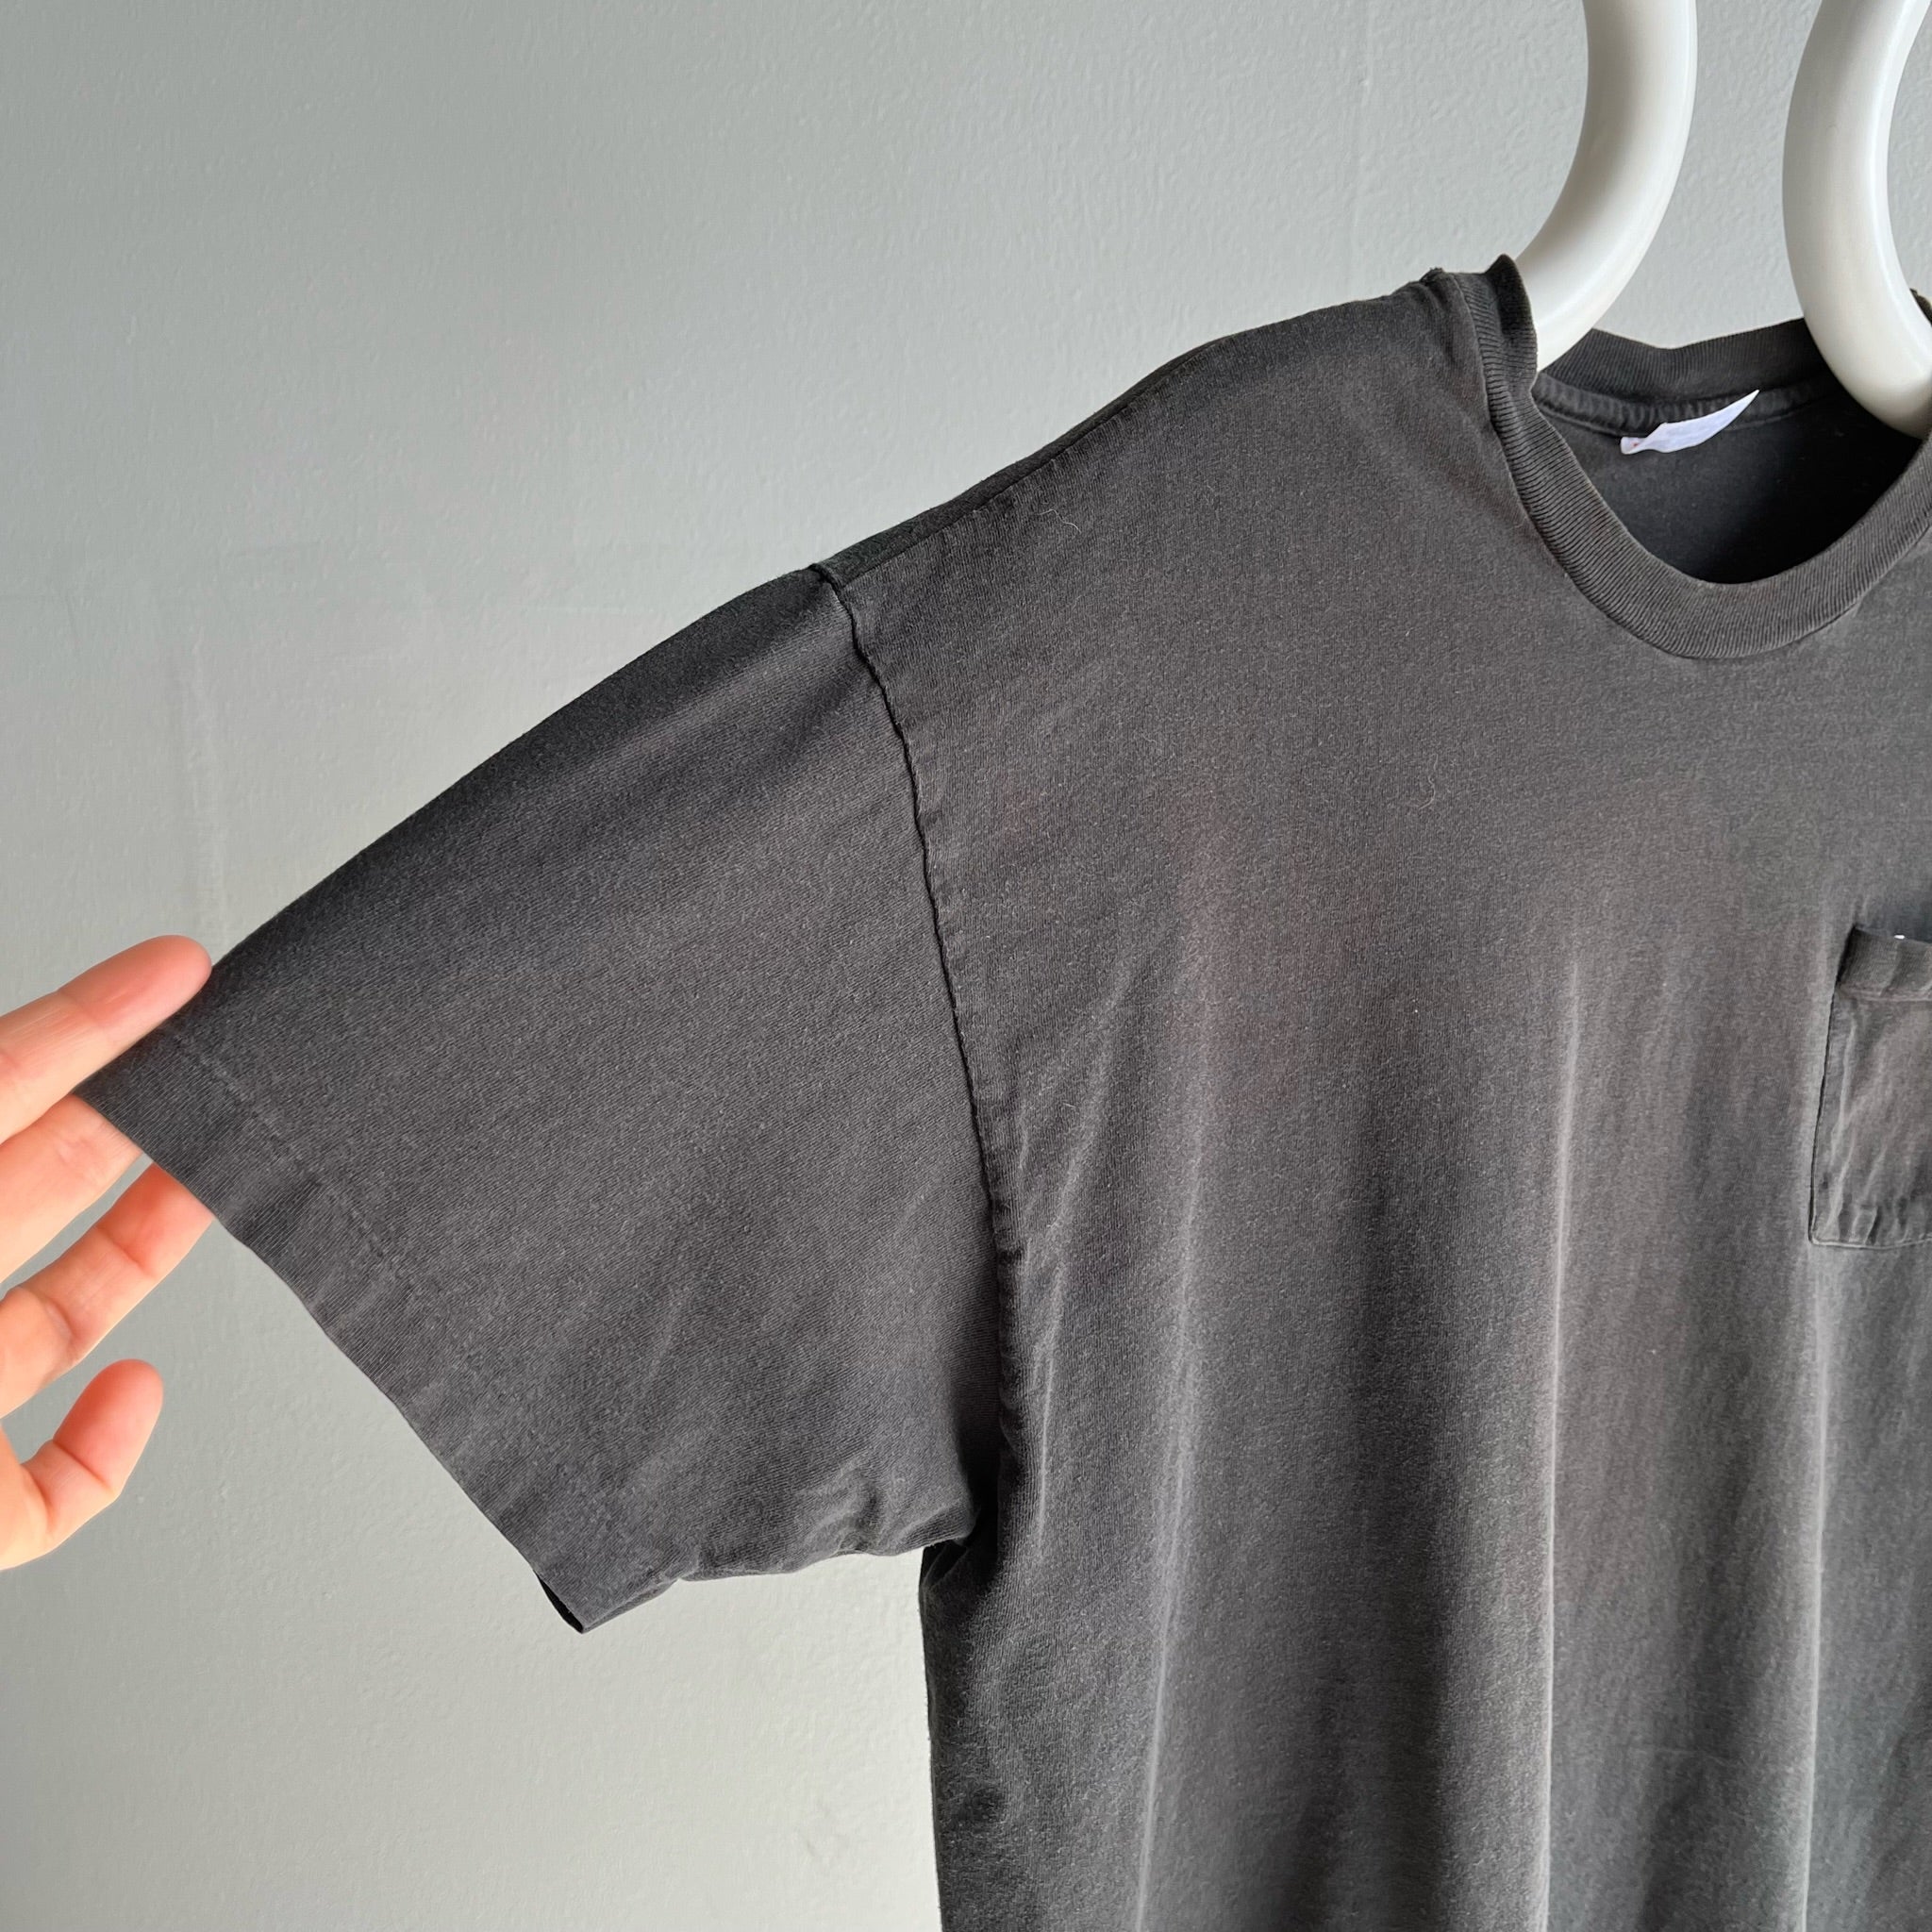 1990/2000s Faded Blank Black Pocket T-Shirt